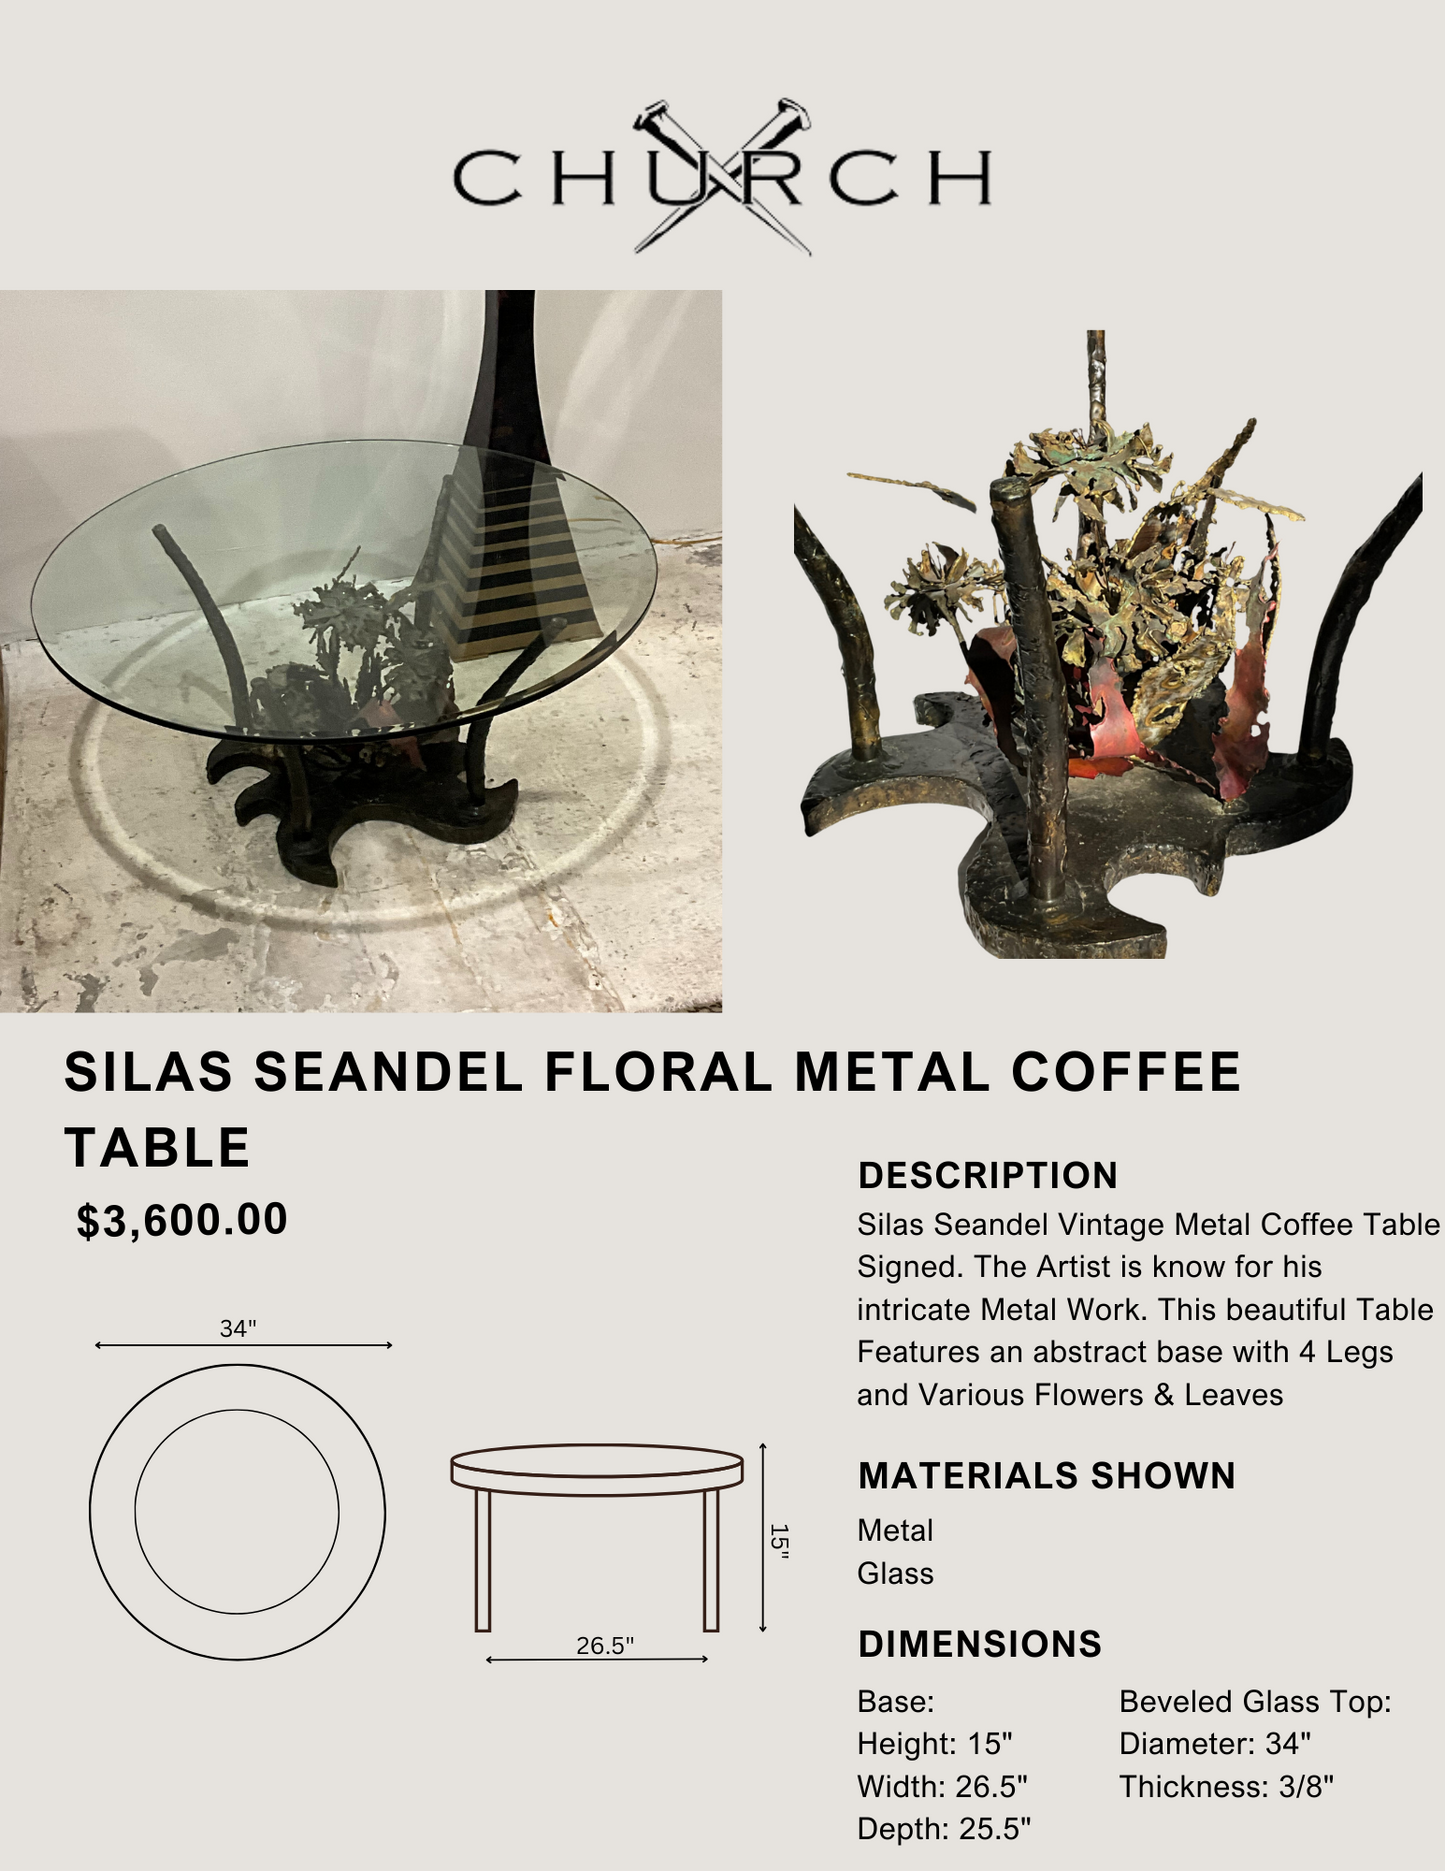 Silas Seandel Floral Metal Coffee Table - Signed